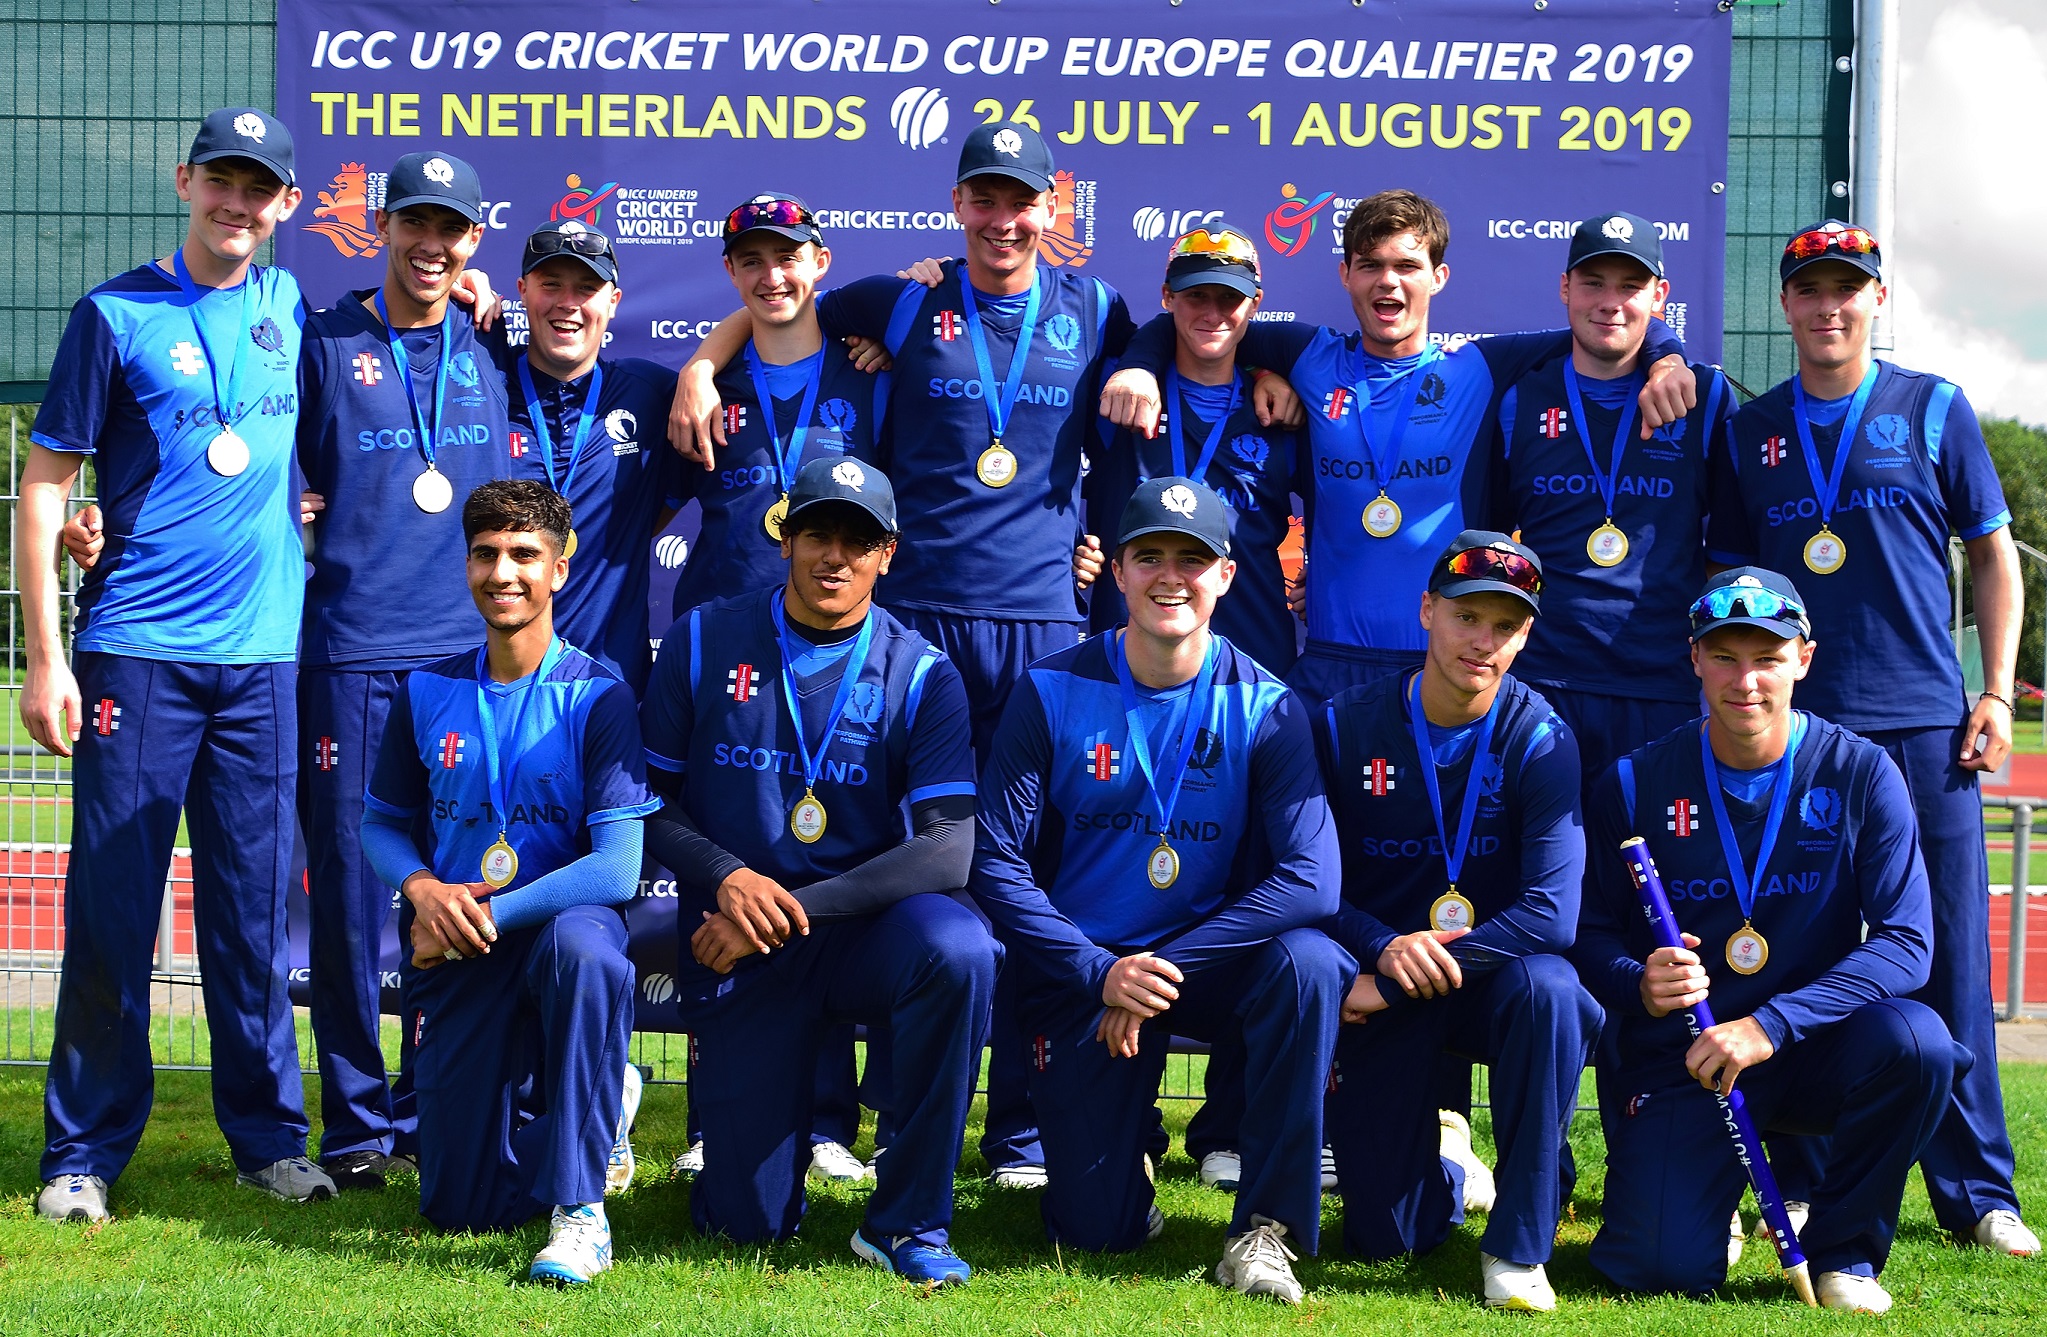 Scotland qualify for the ICC U19 Cricket World Cup 2020